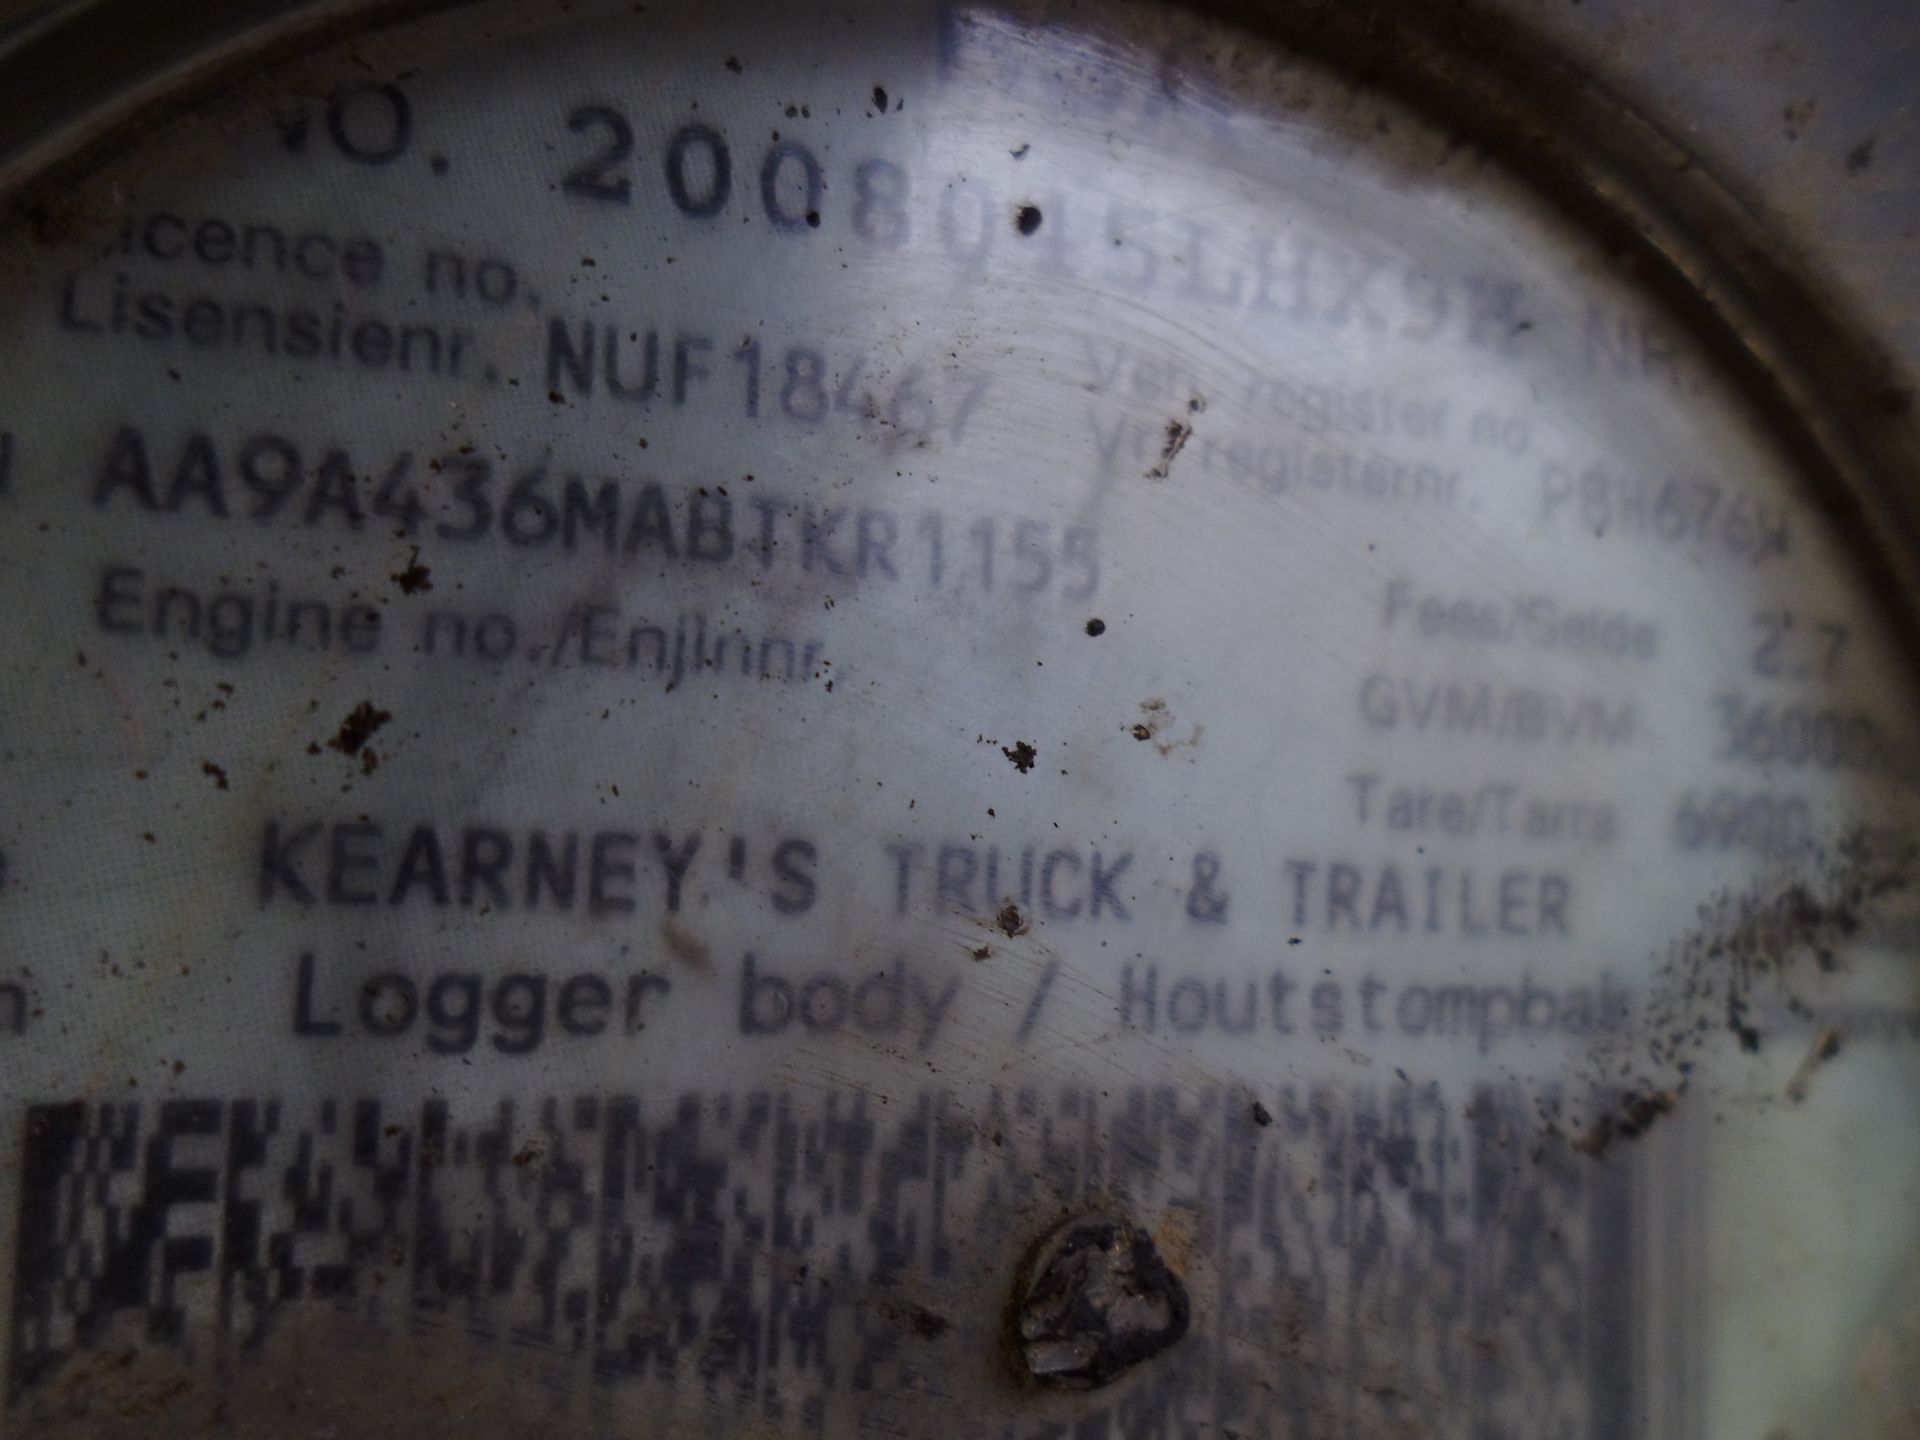 2011 KEARNEYS 4 AXLE EXTENDABLE DRAWBAR TIMBER TRAILER - REG NO: NUF18467 (FLEET NO: TDB004) - Image 7 of 8